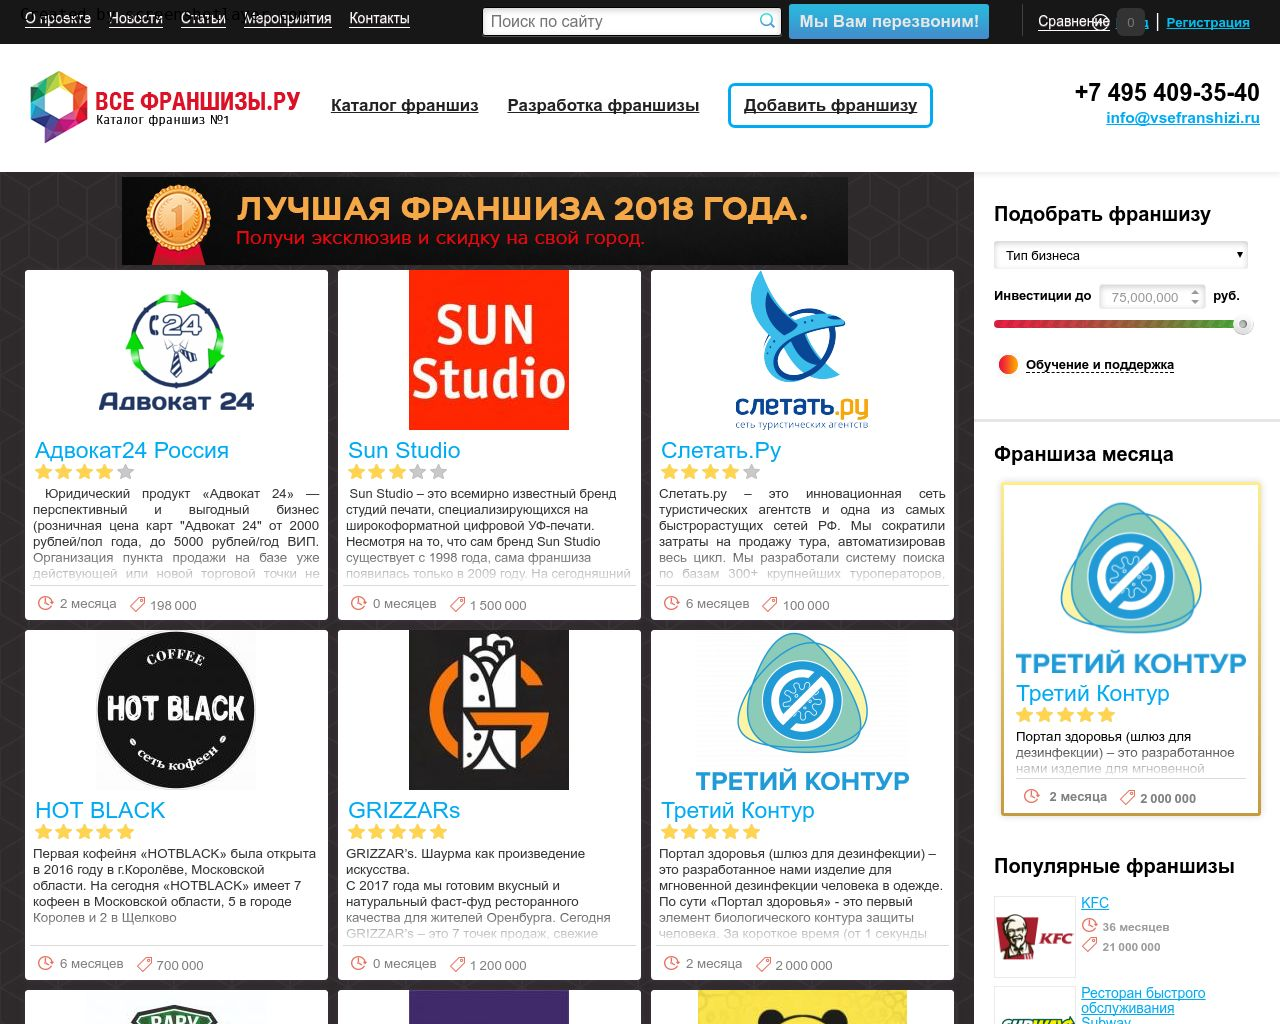 Изображение сайта vsefranshizi.ru в разрешении 1280x1024